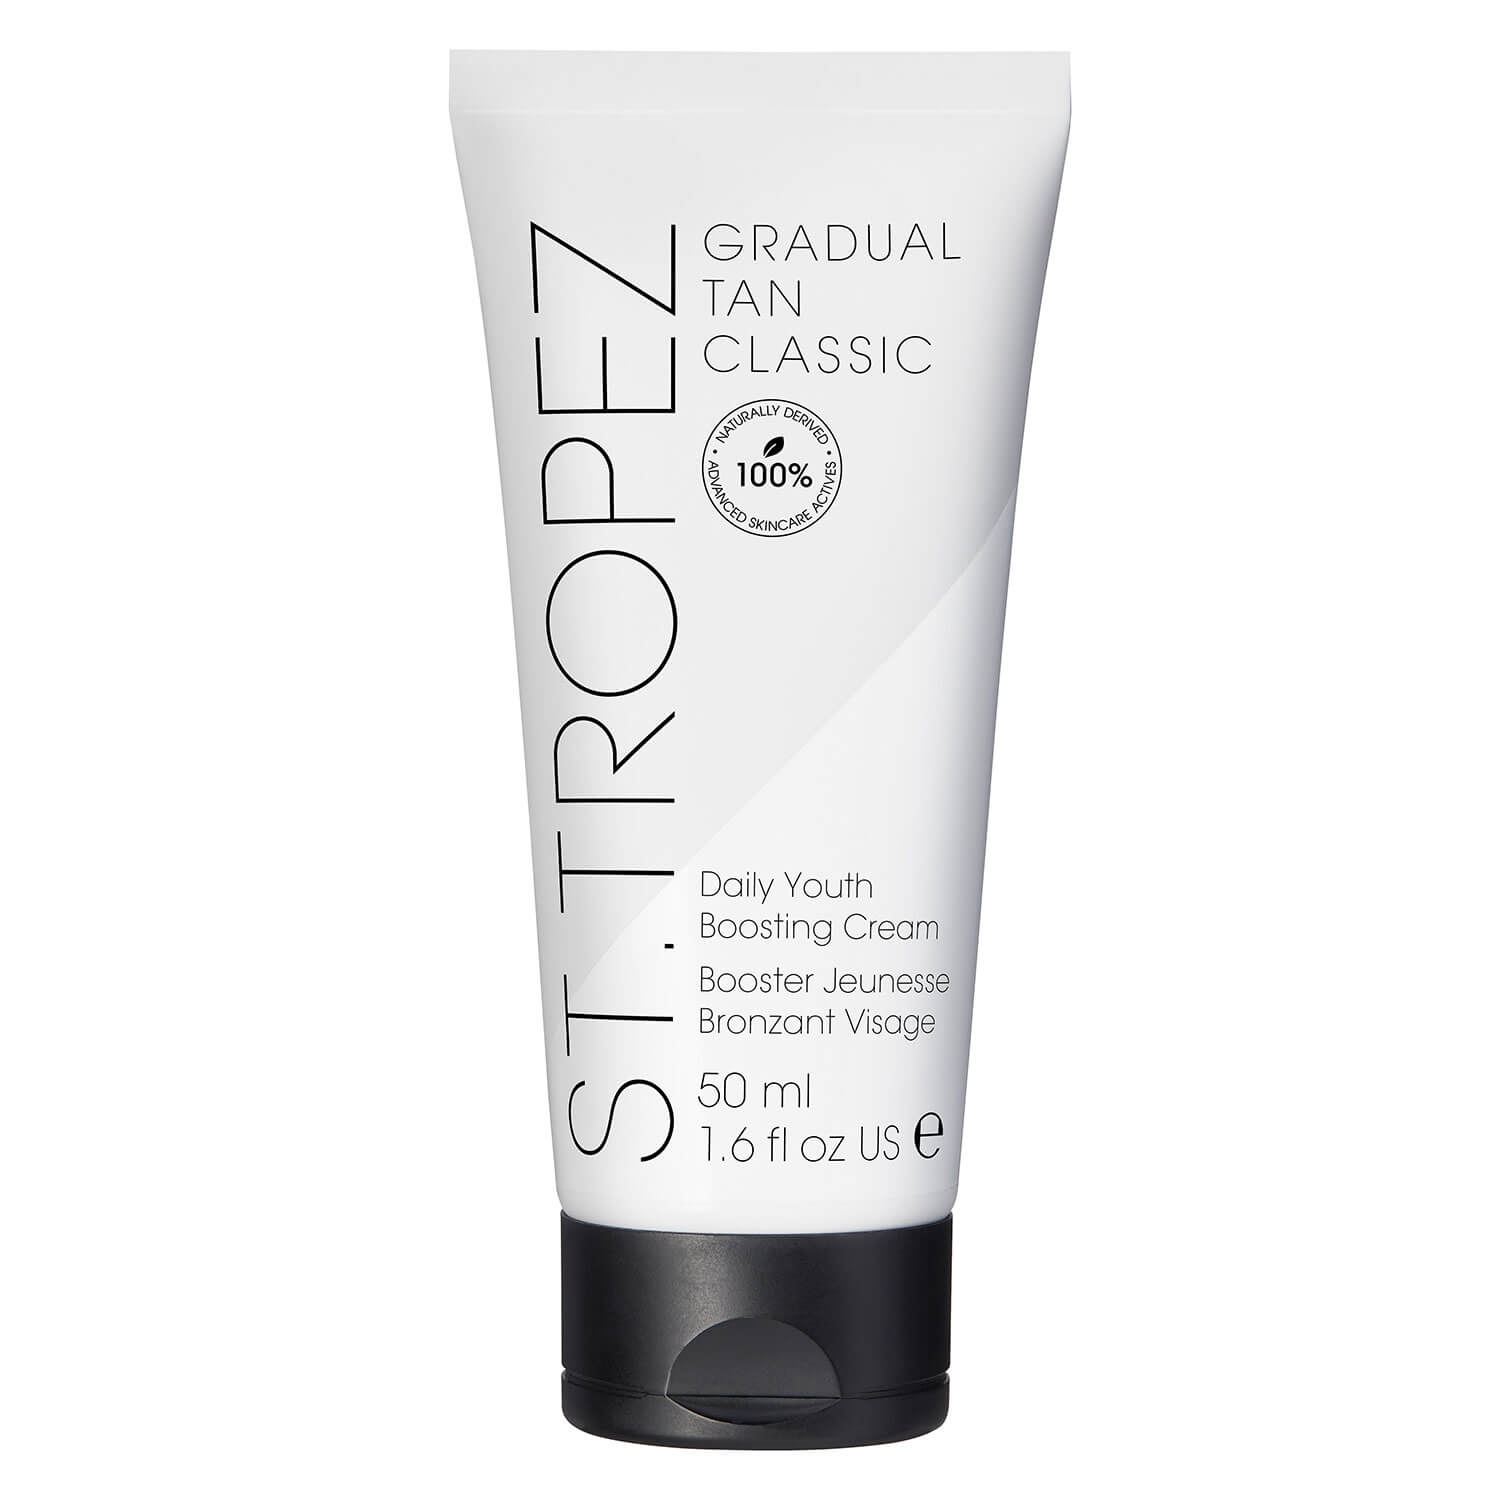 Produktbild von St.Tropez - Gradual Tan Classic Daily Youth Boosting Cream